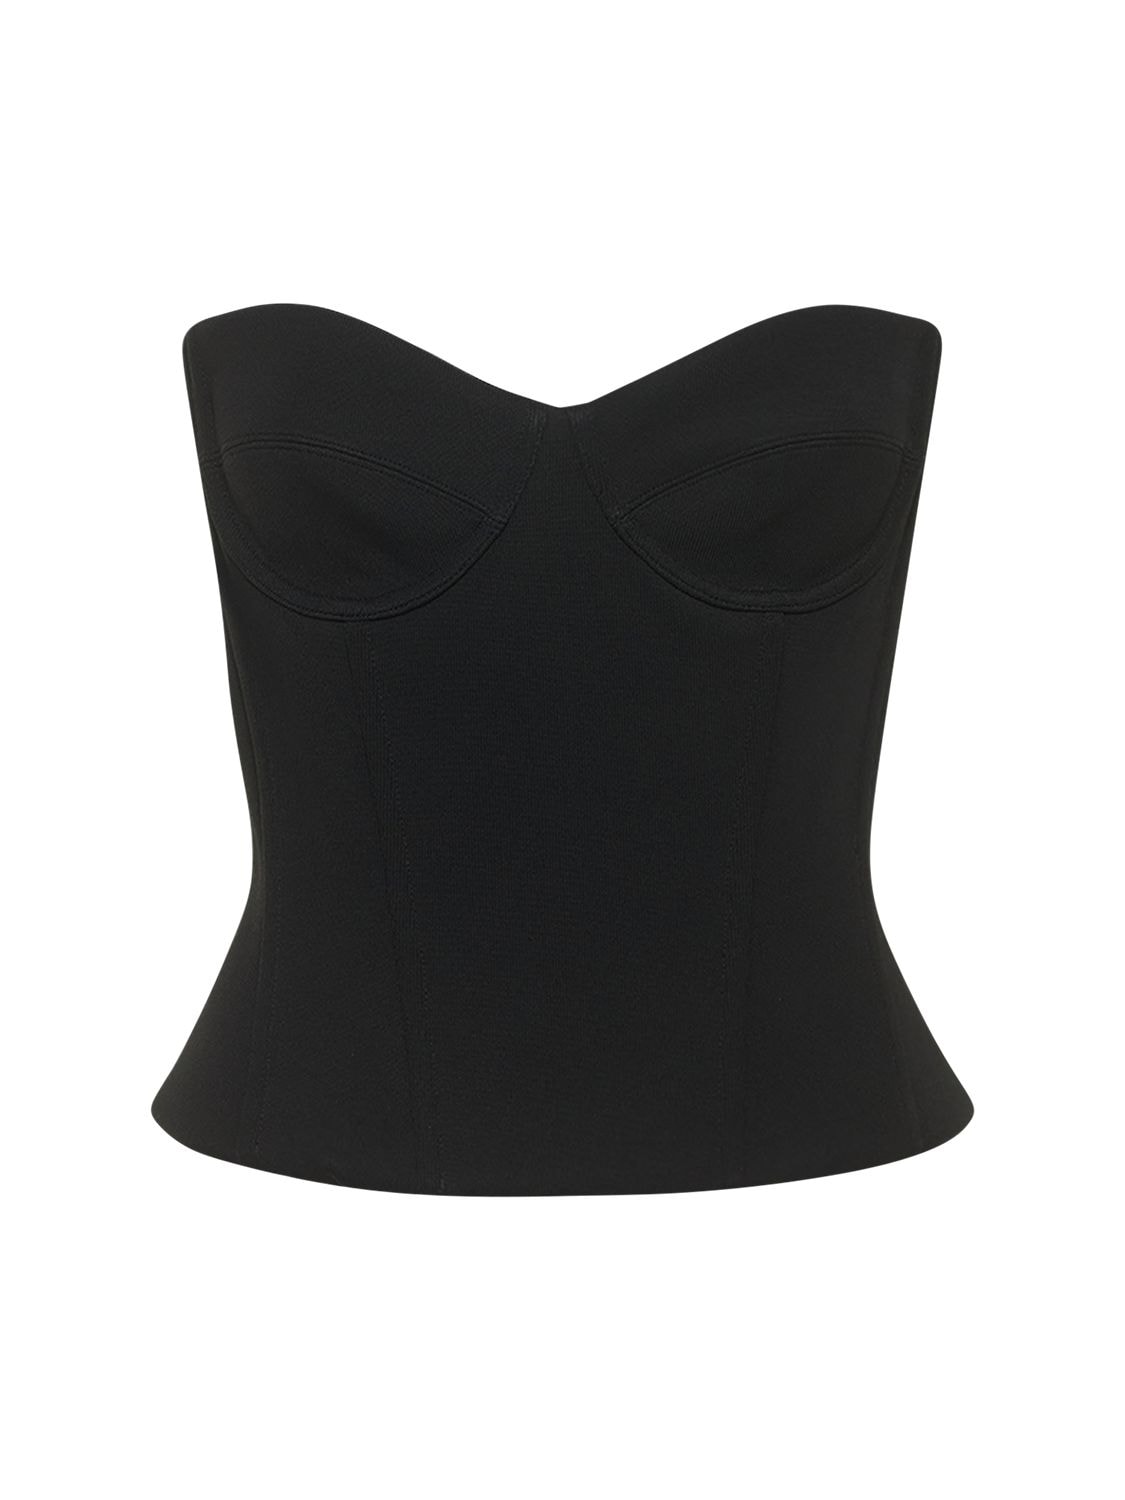 Ann Taylor Top Shirt Strapless Boning Built in Bra Evening Black Cream 2 XS